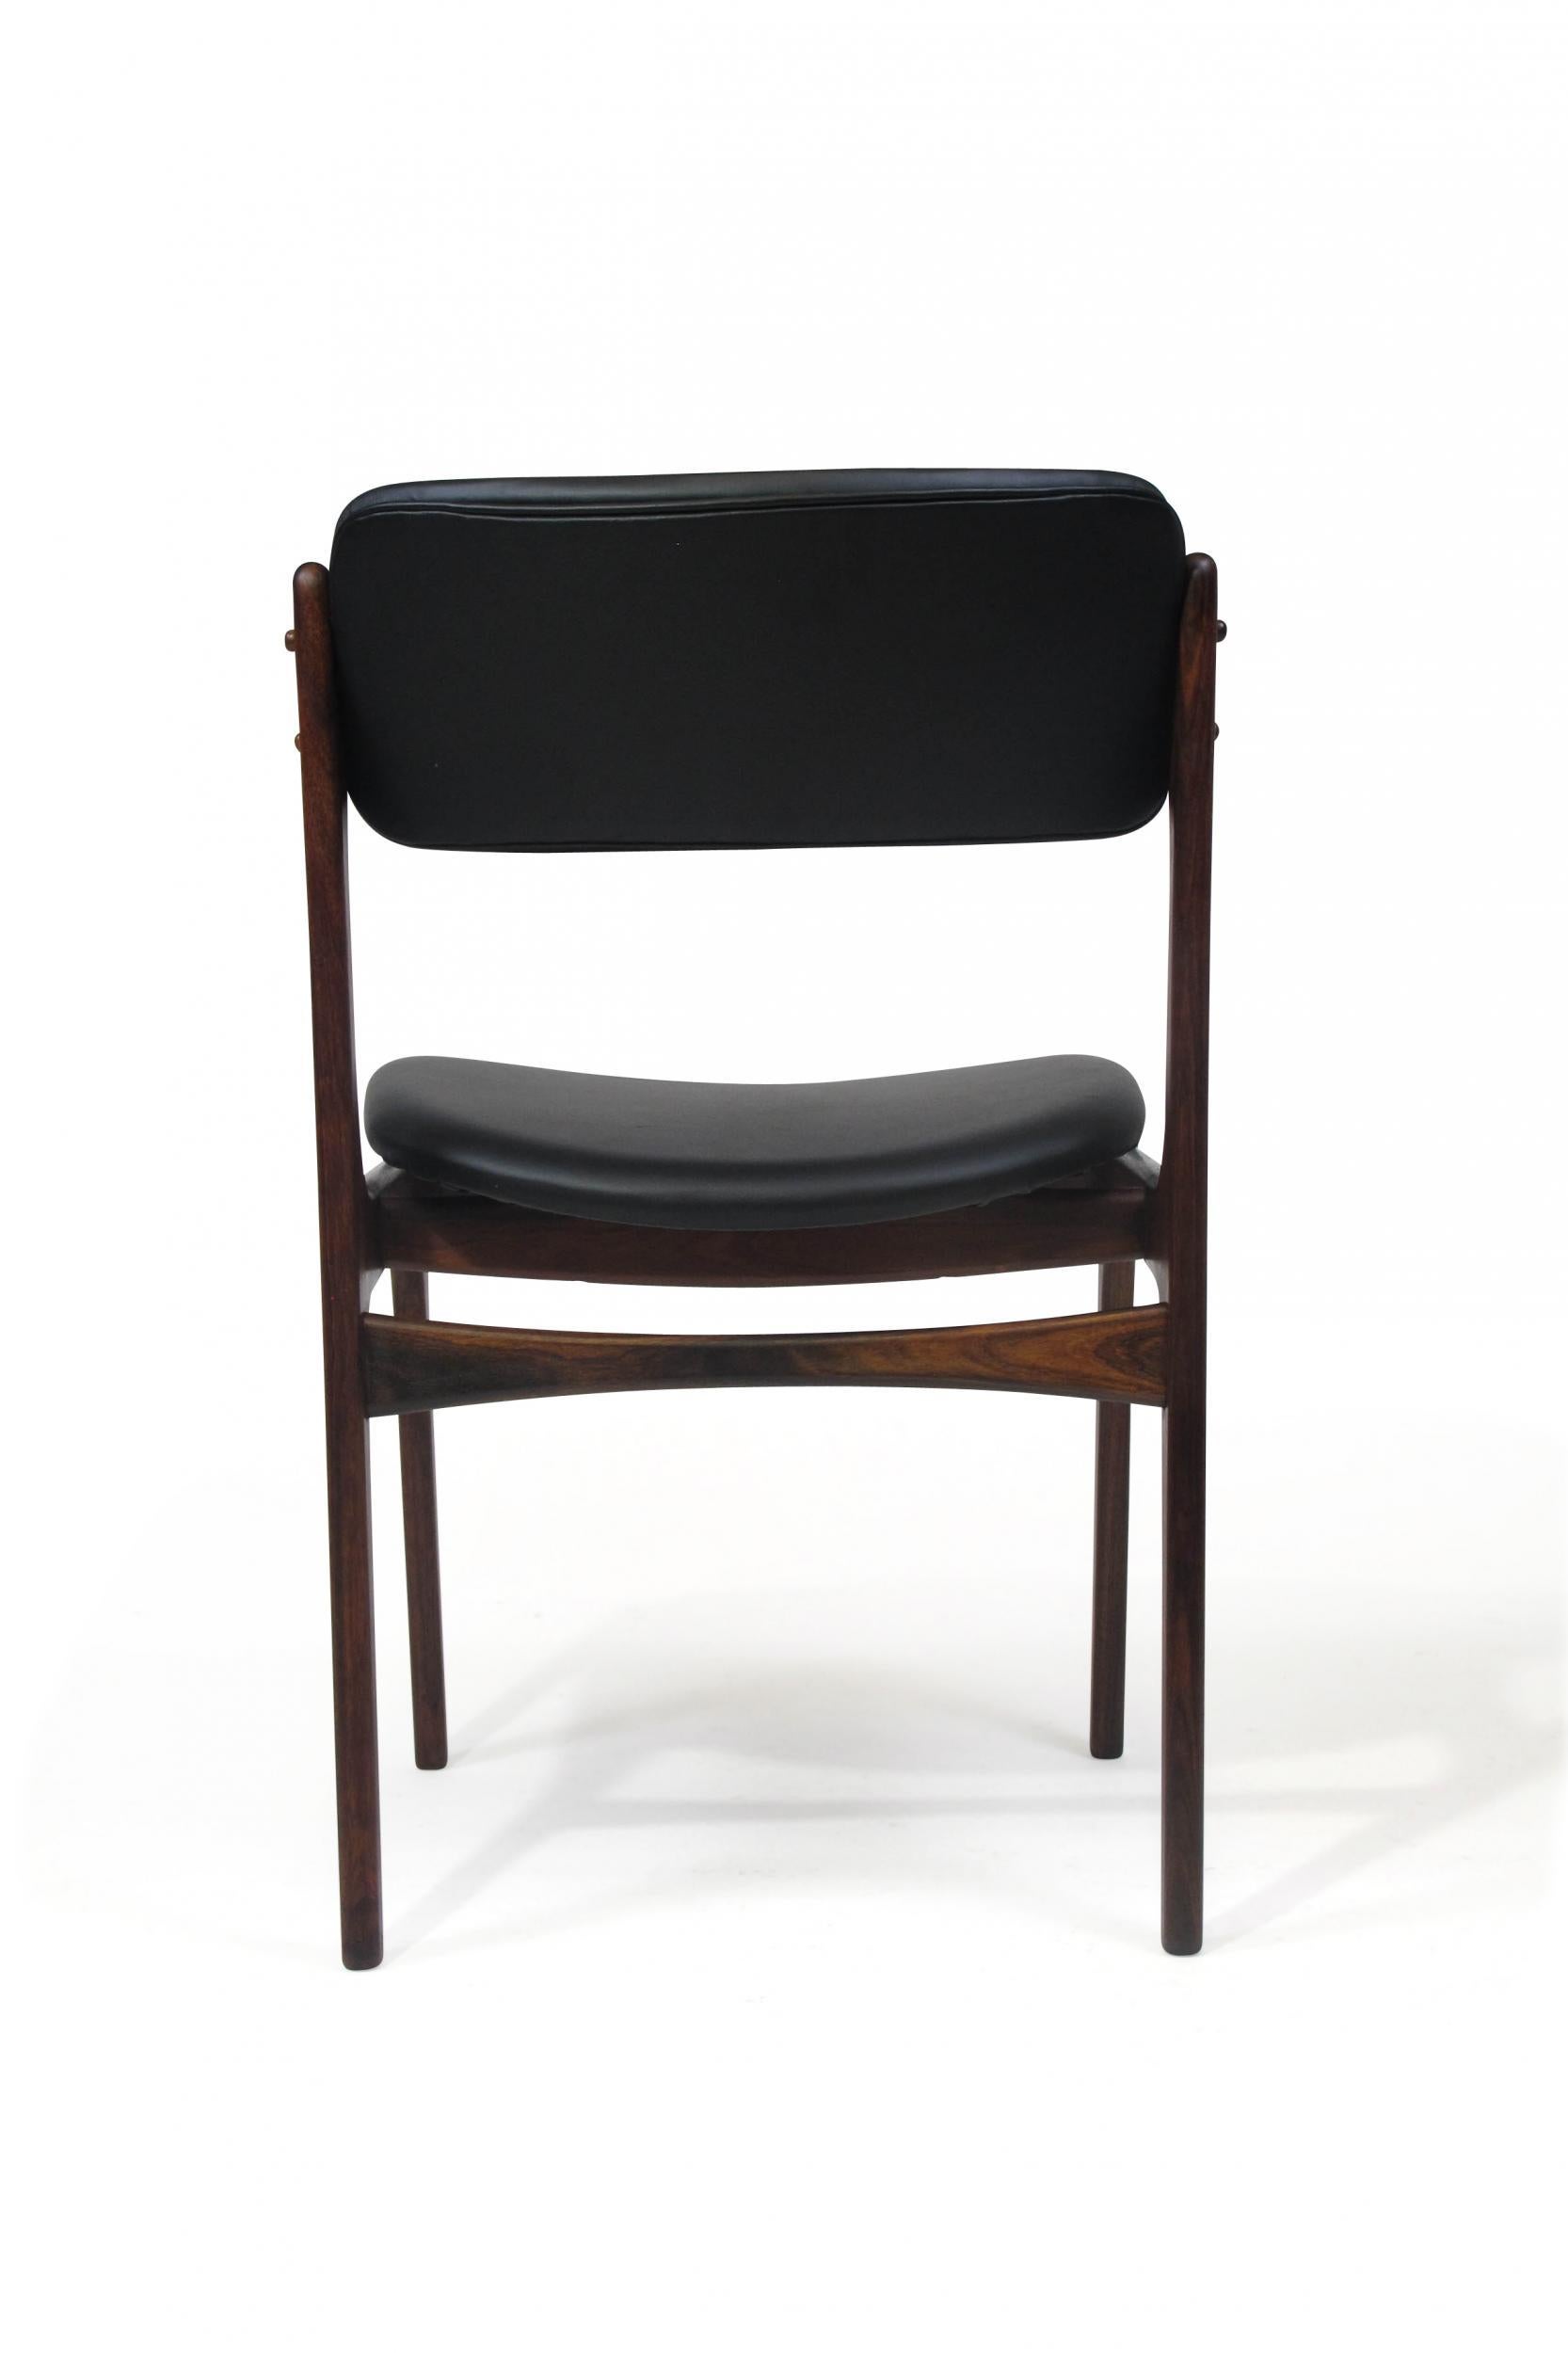 6 Erik Buck Rosewood Danish Dining Chairs in Black Leather 1